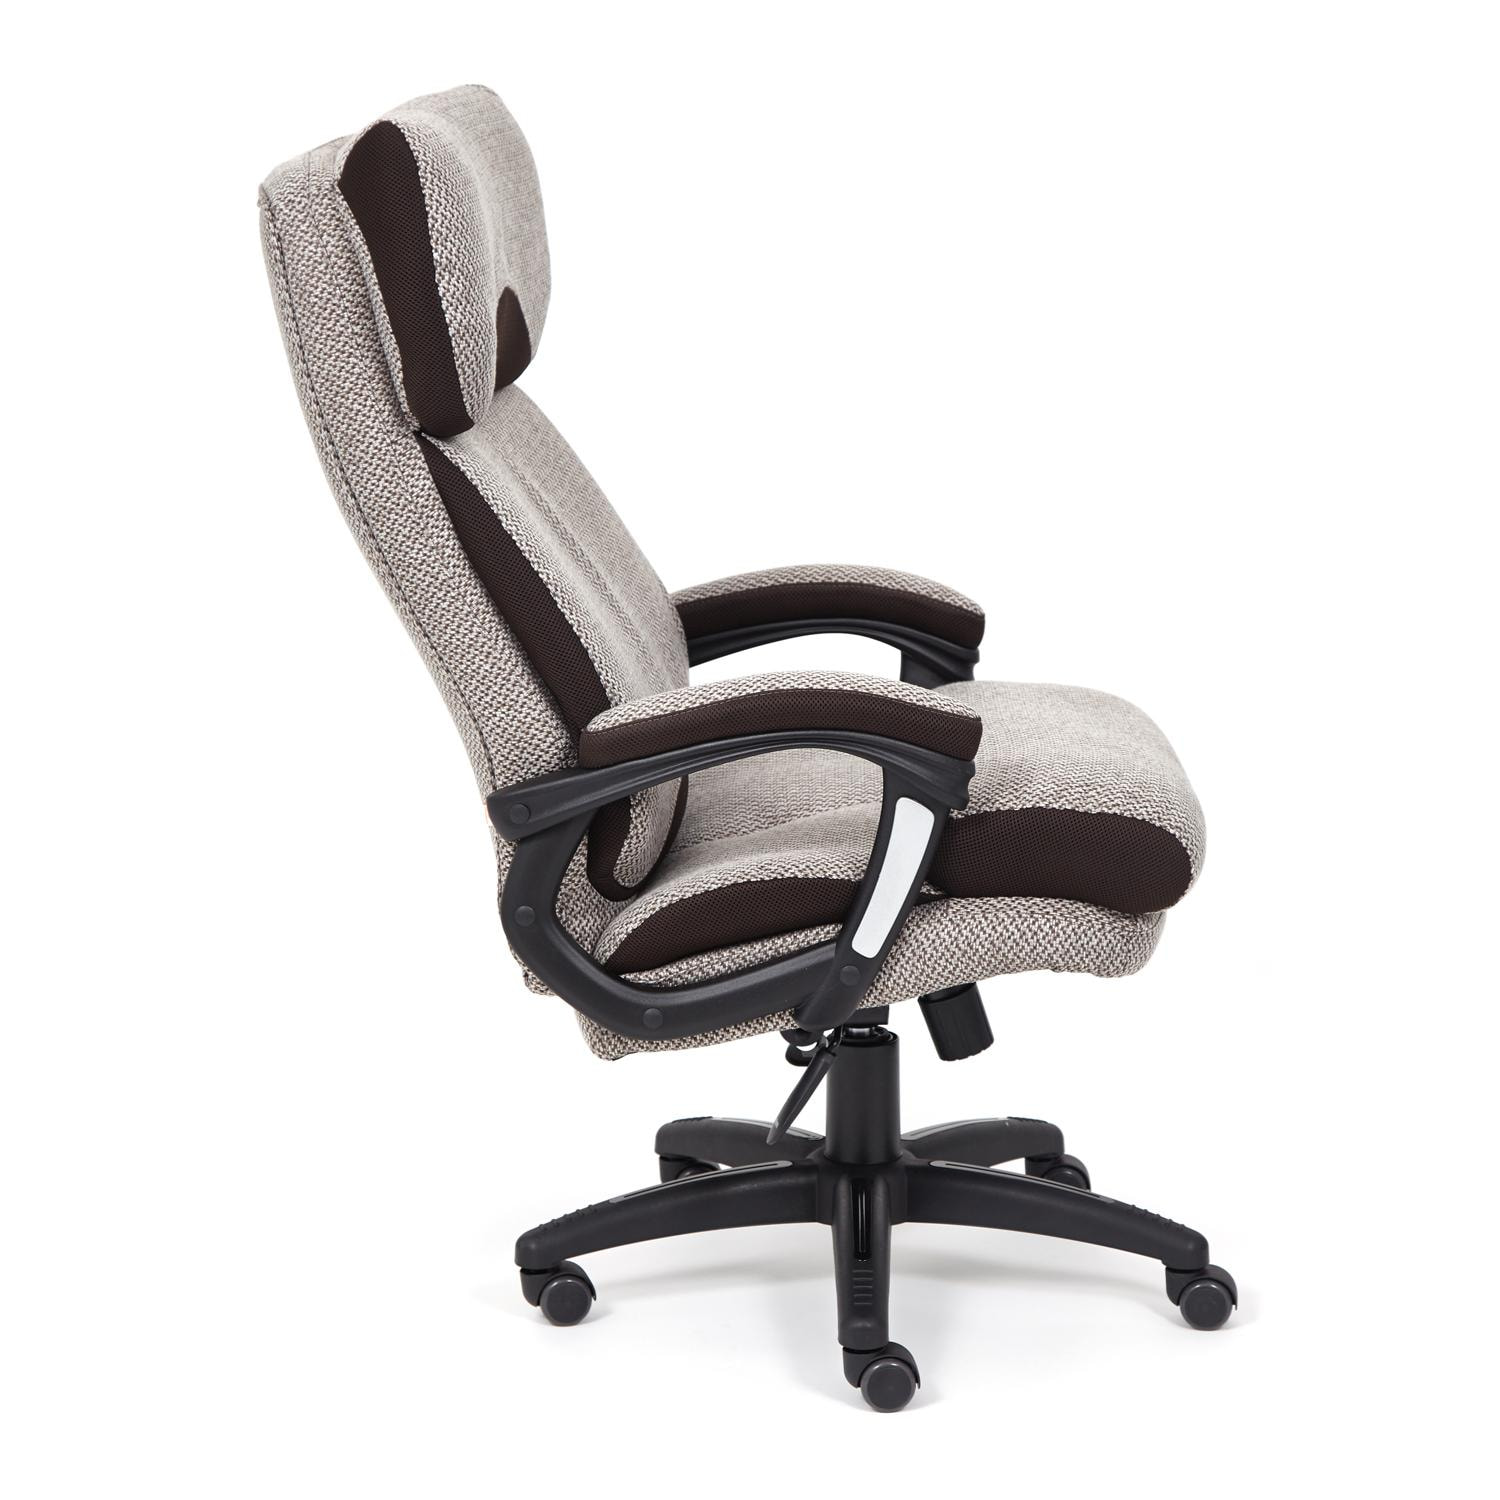 Кресло DUKE ткань, норка/коричневый, MJ190-6/TW-24